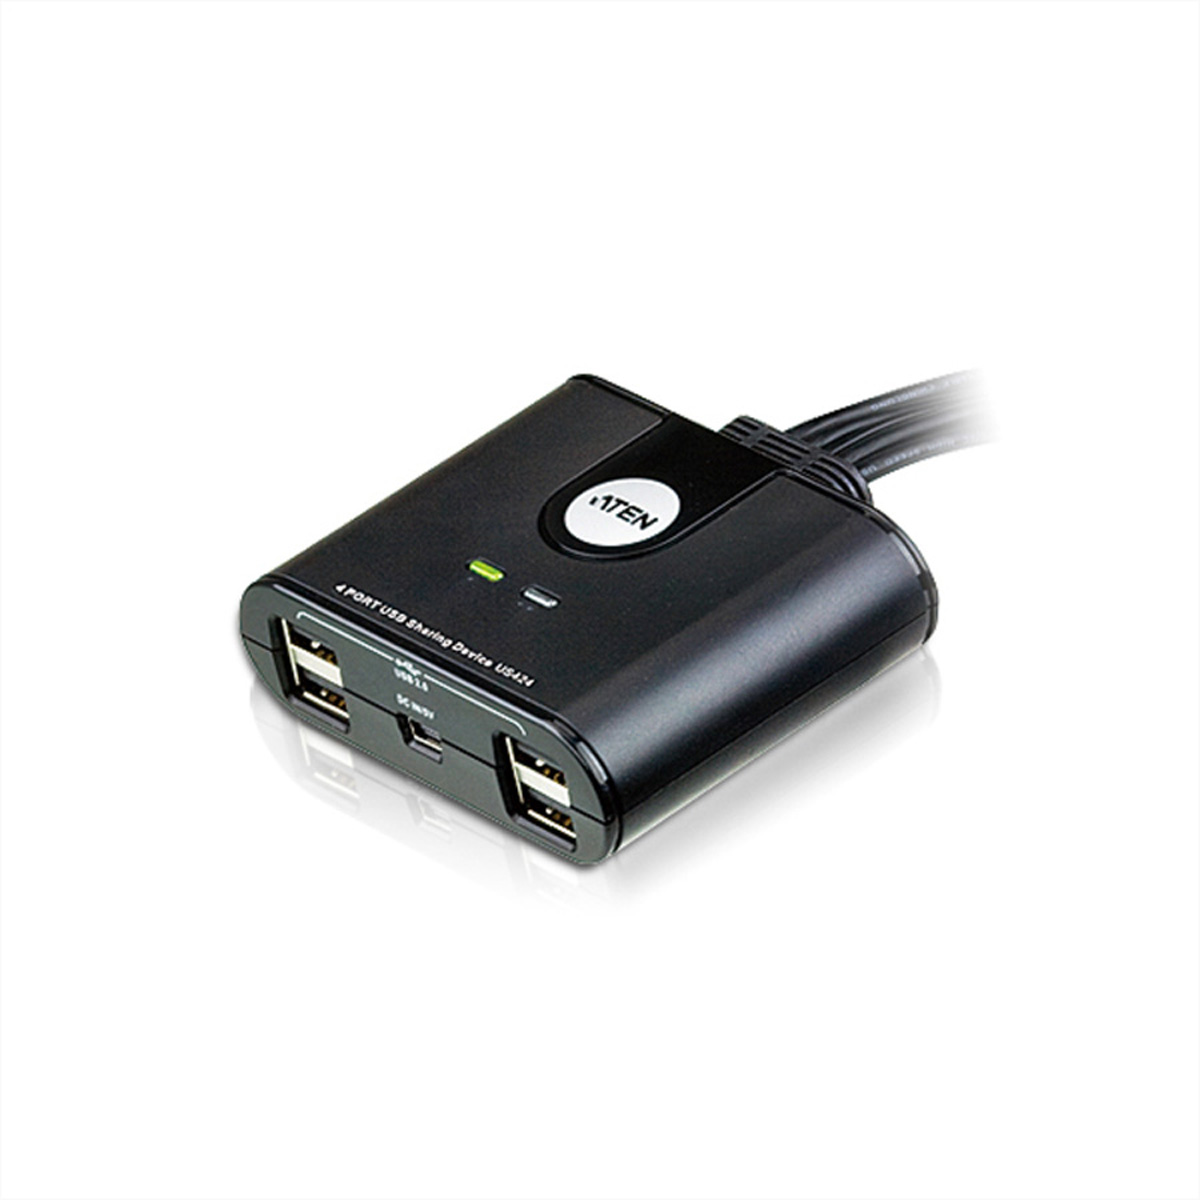 ATEN US424 USB 2.0-Peripheriegeräte-Switch mit 4 Ports